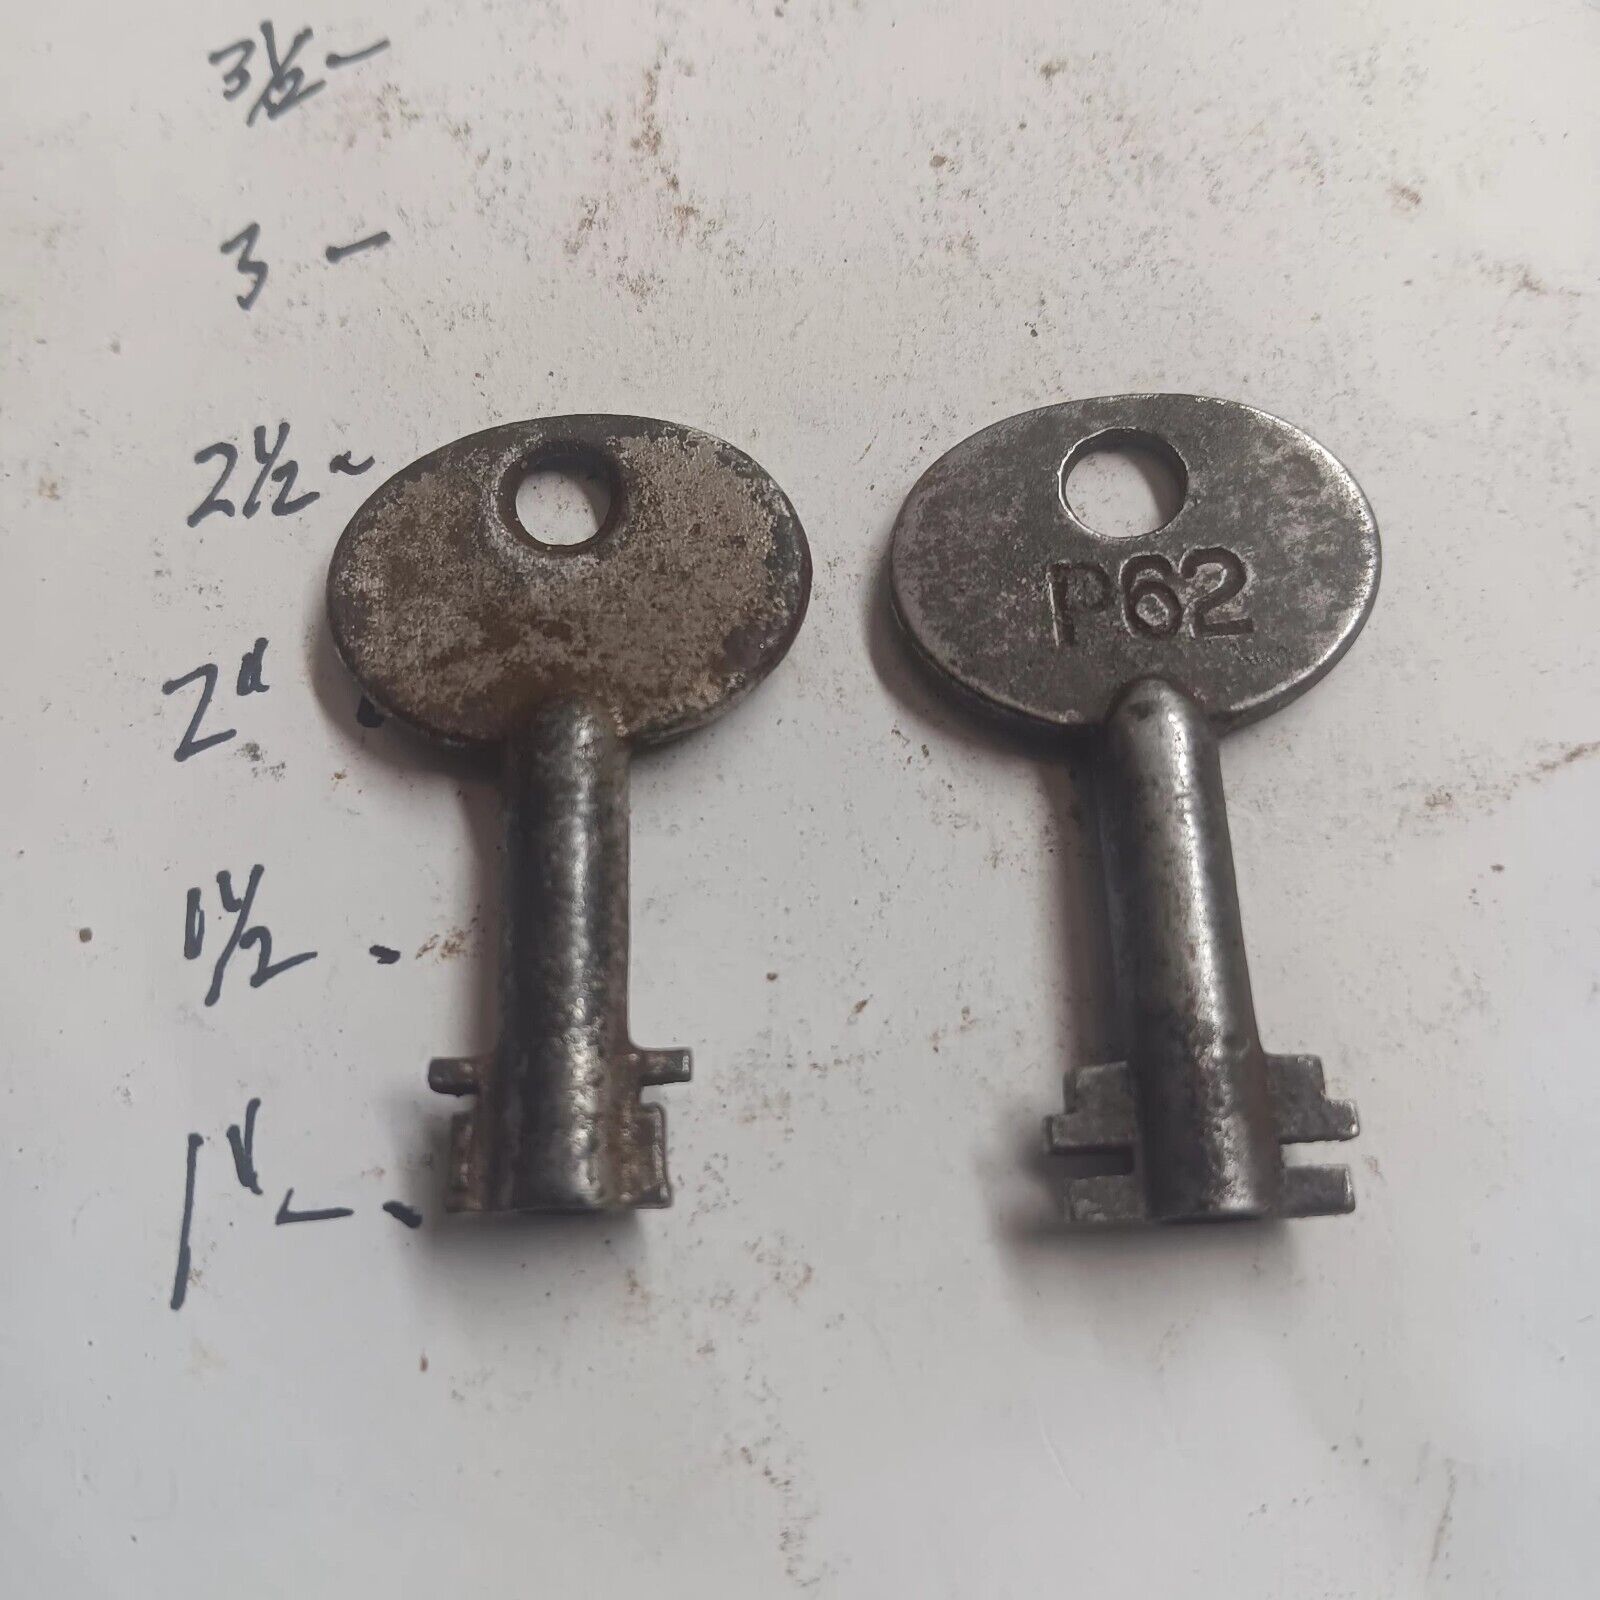 2 Antique Double Bit Open Barrel Trunk Keys. Unbranded. 1 With \